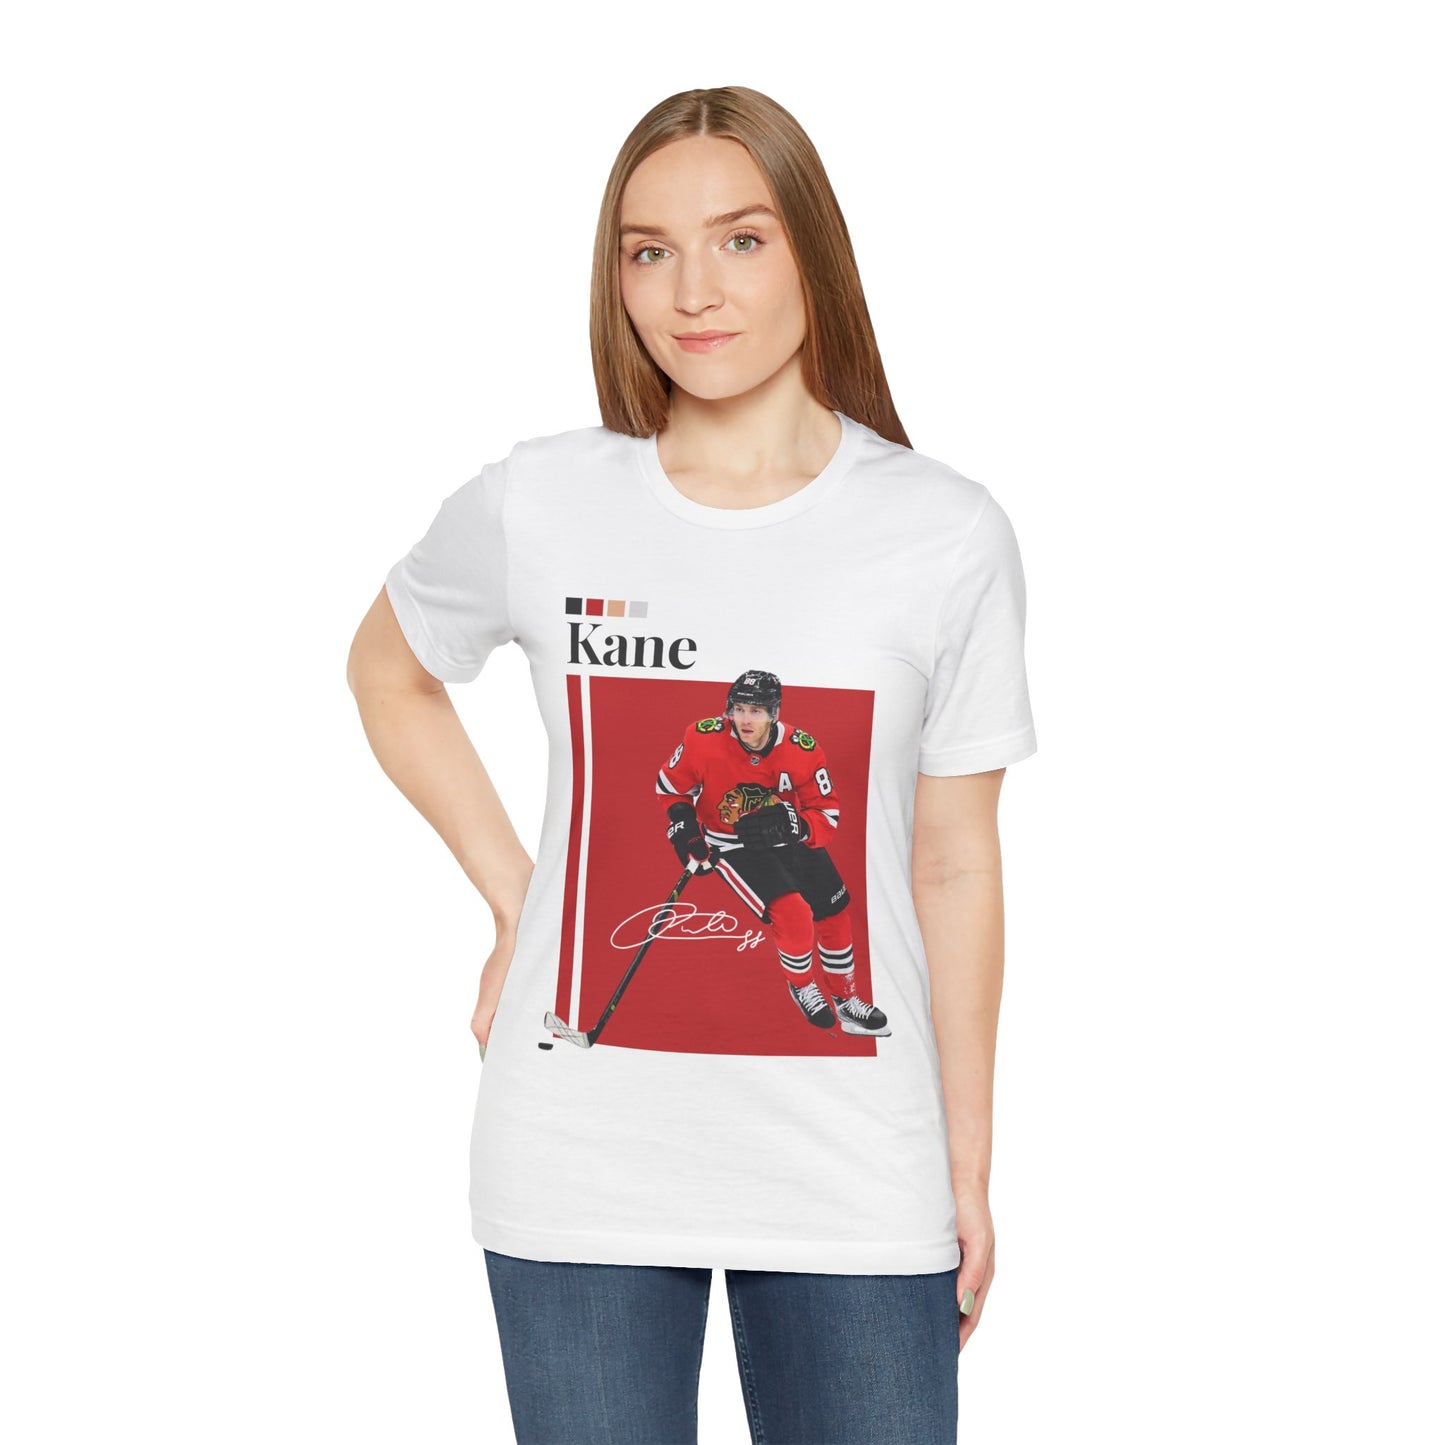 NHL All-Star Patrick Kane Graphic T-Shirt womens fashion white